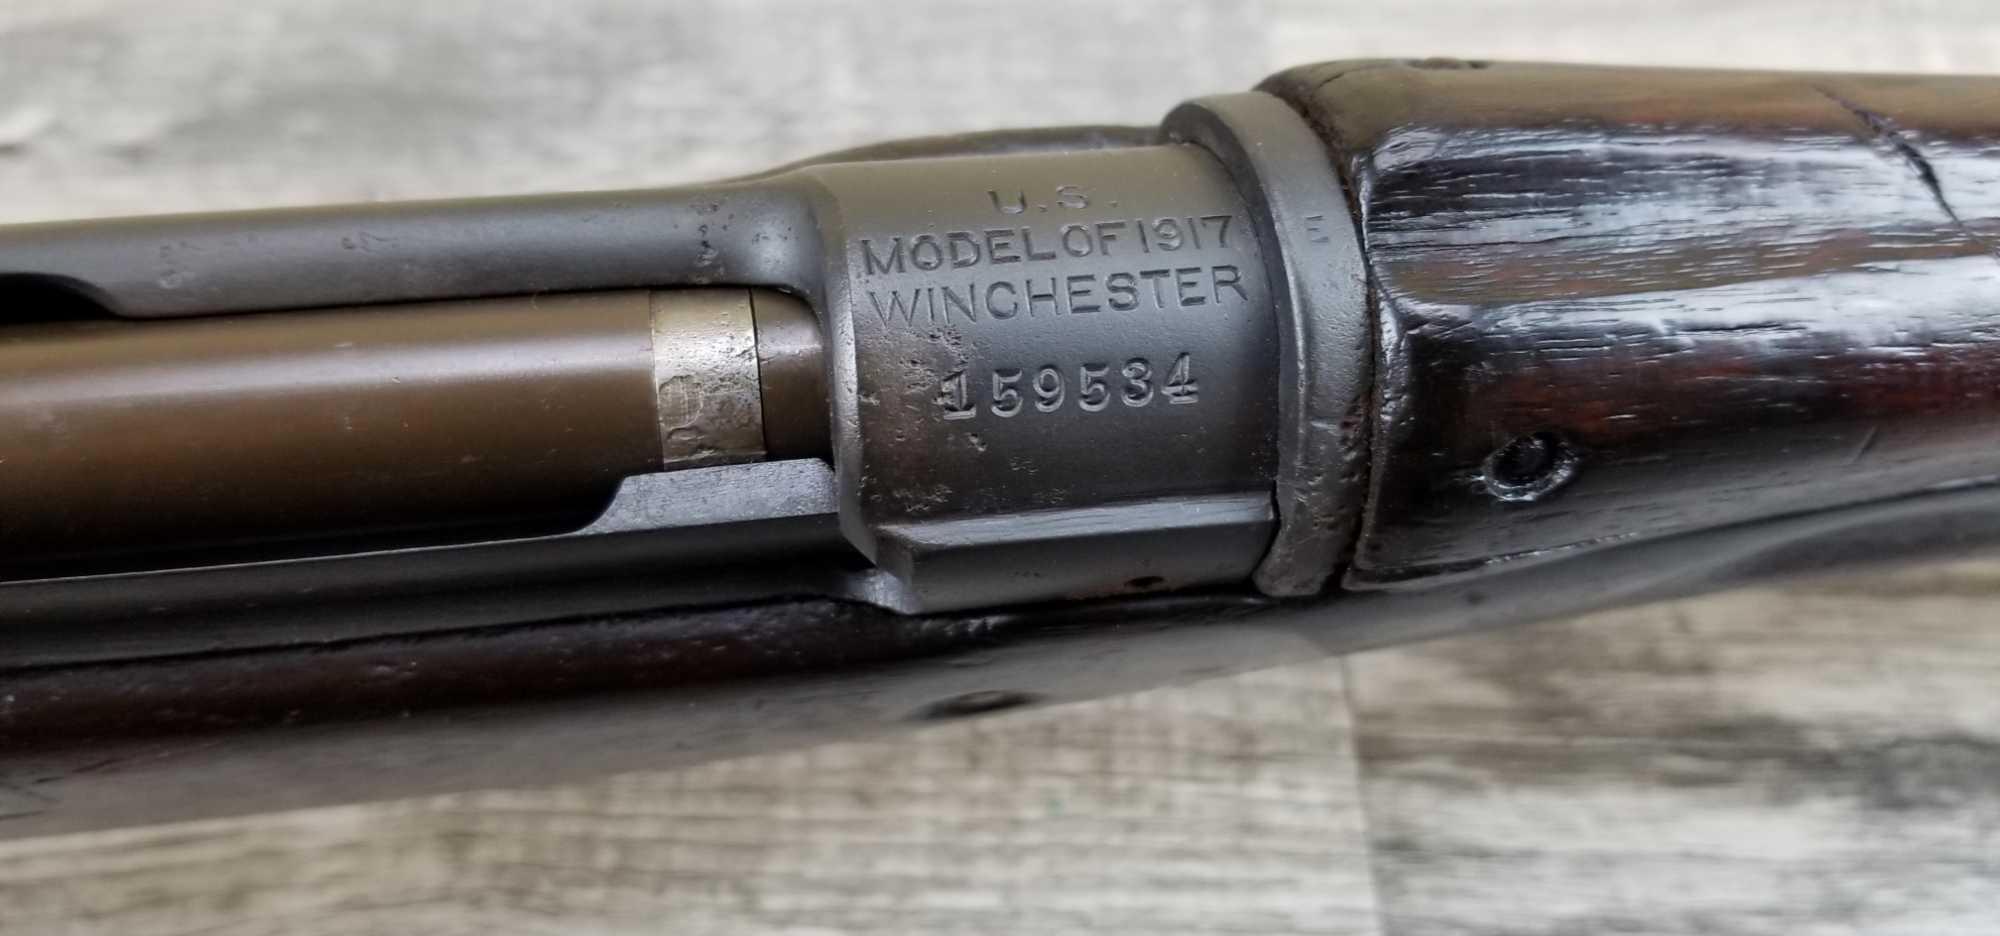 WINCHESTER MODEL 1917